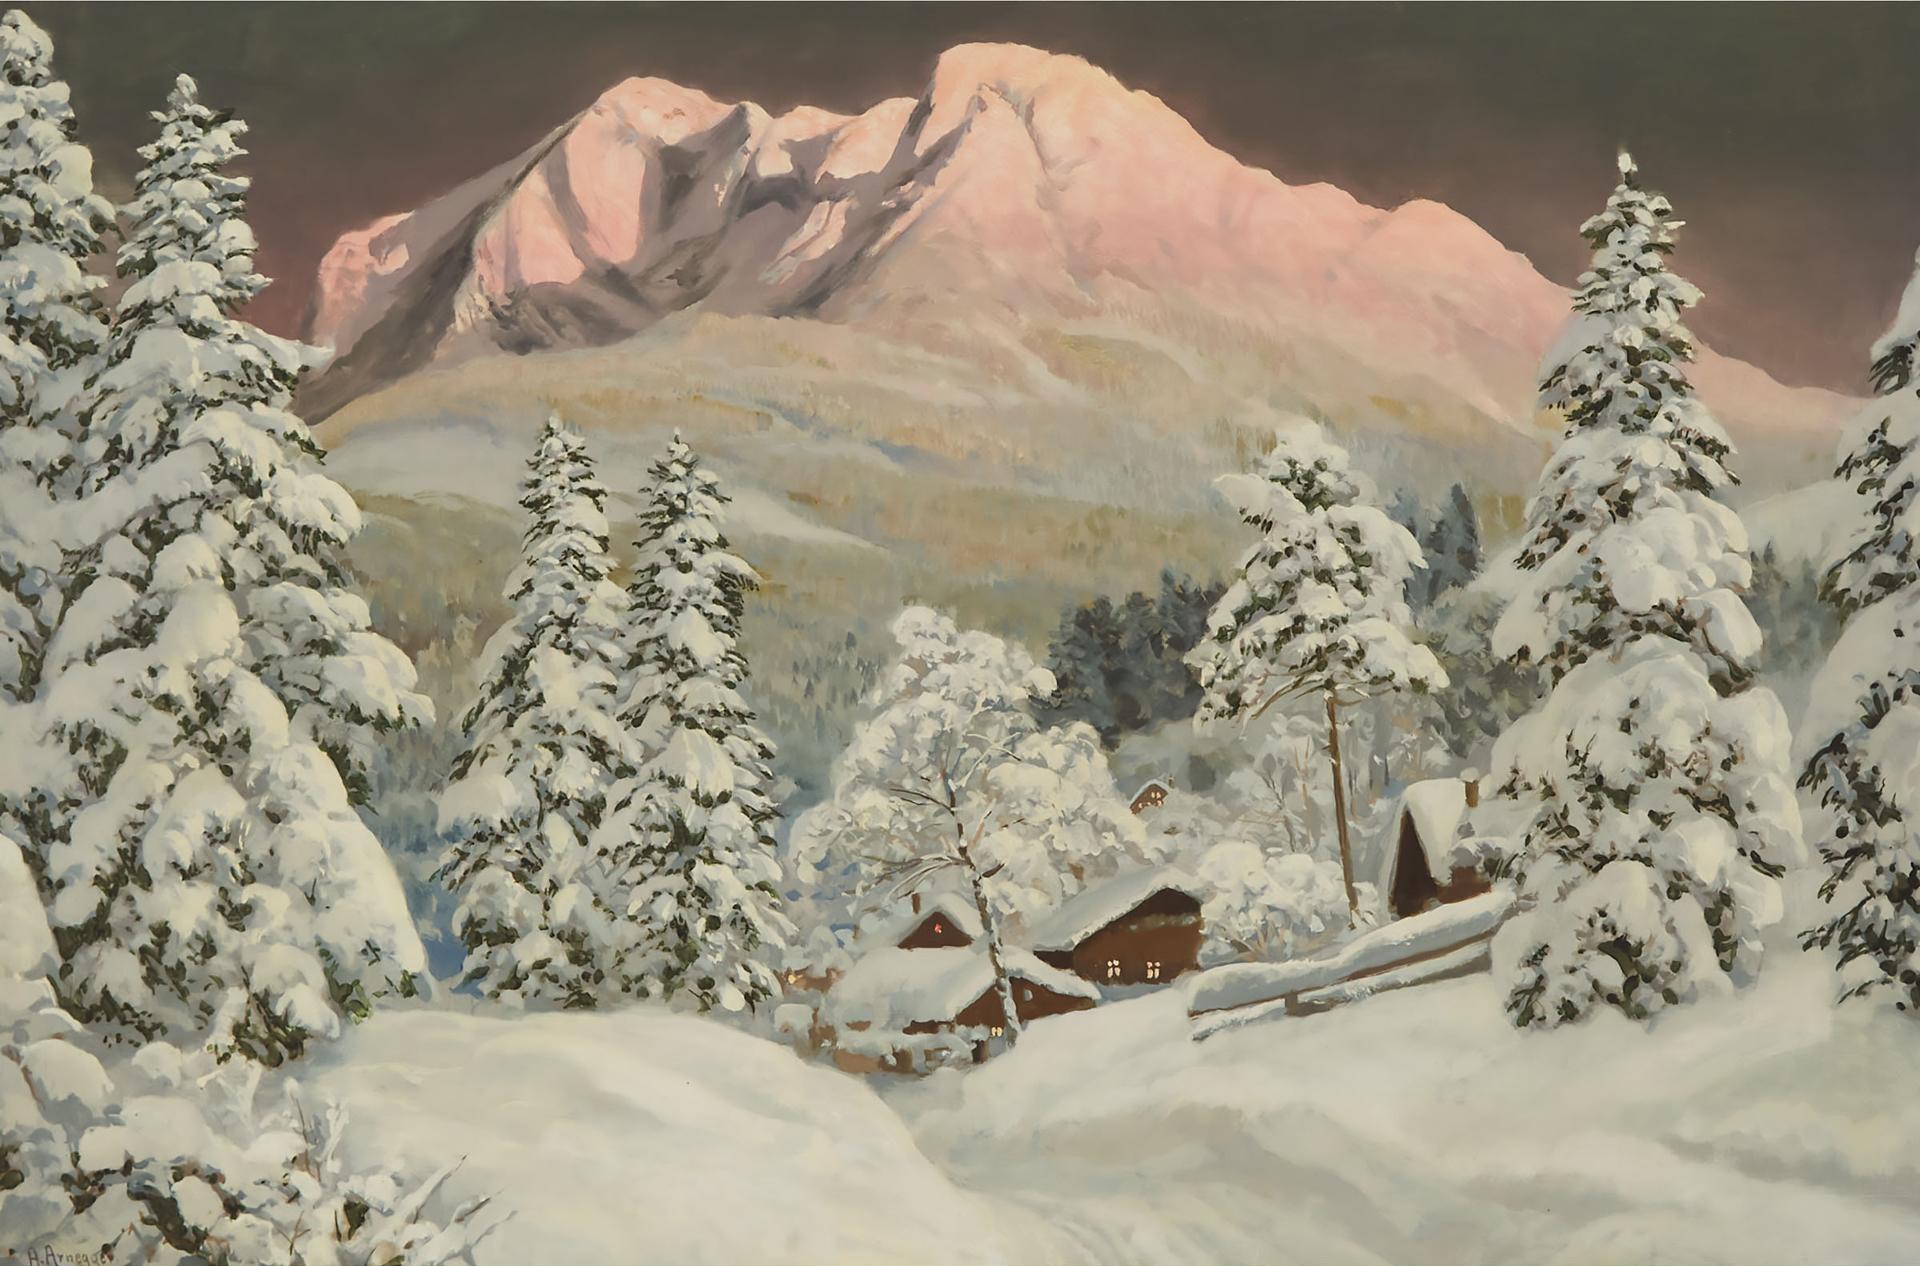 Alois Arnegger (1879-1967) - Rax Area, Austria